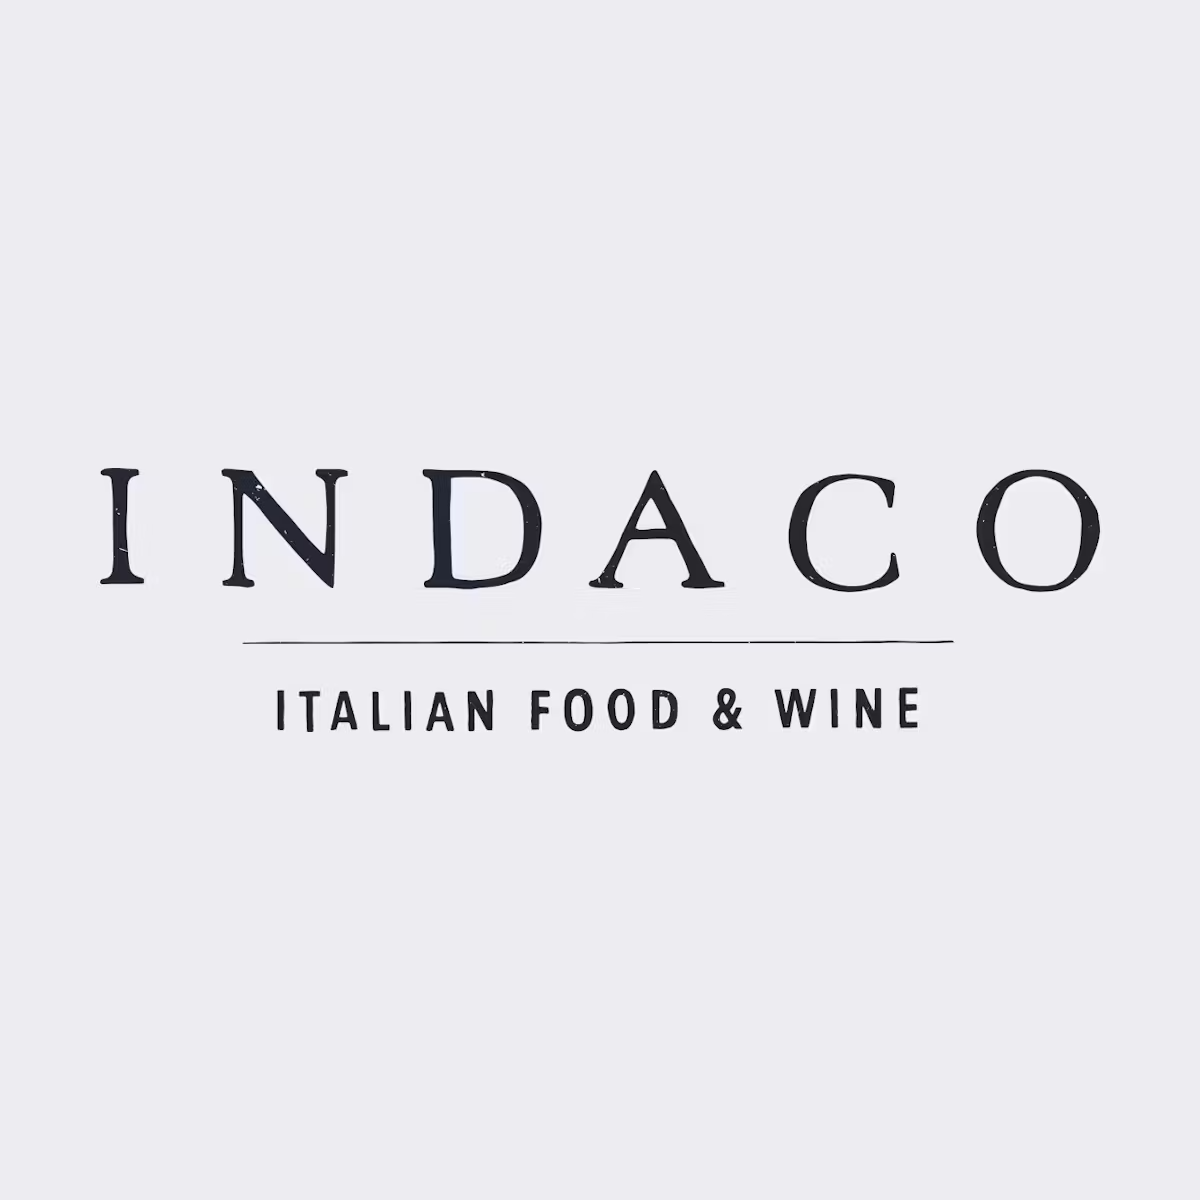 Indaco Italian Food and Wine logo